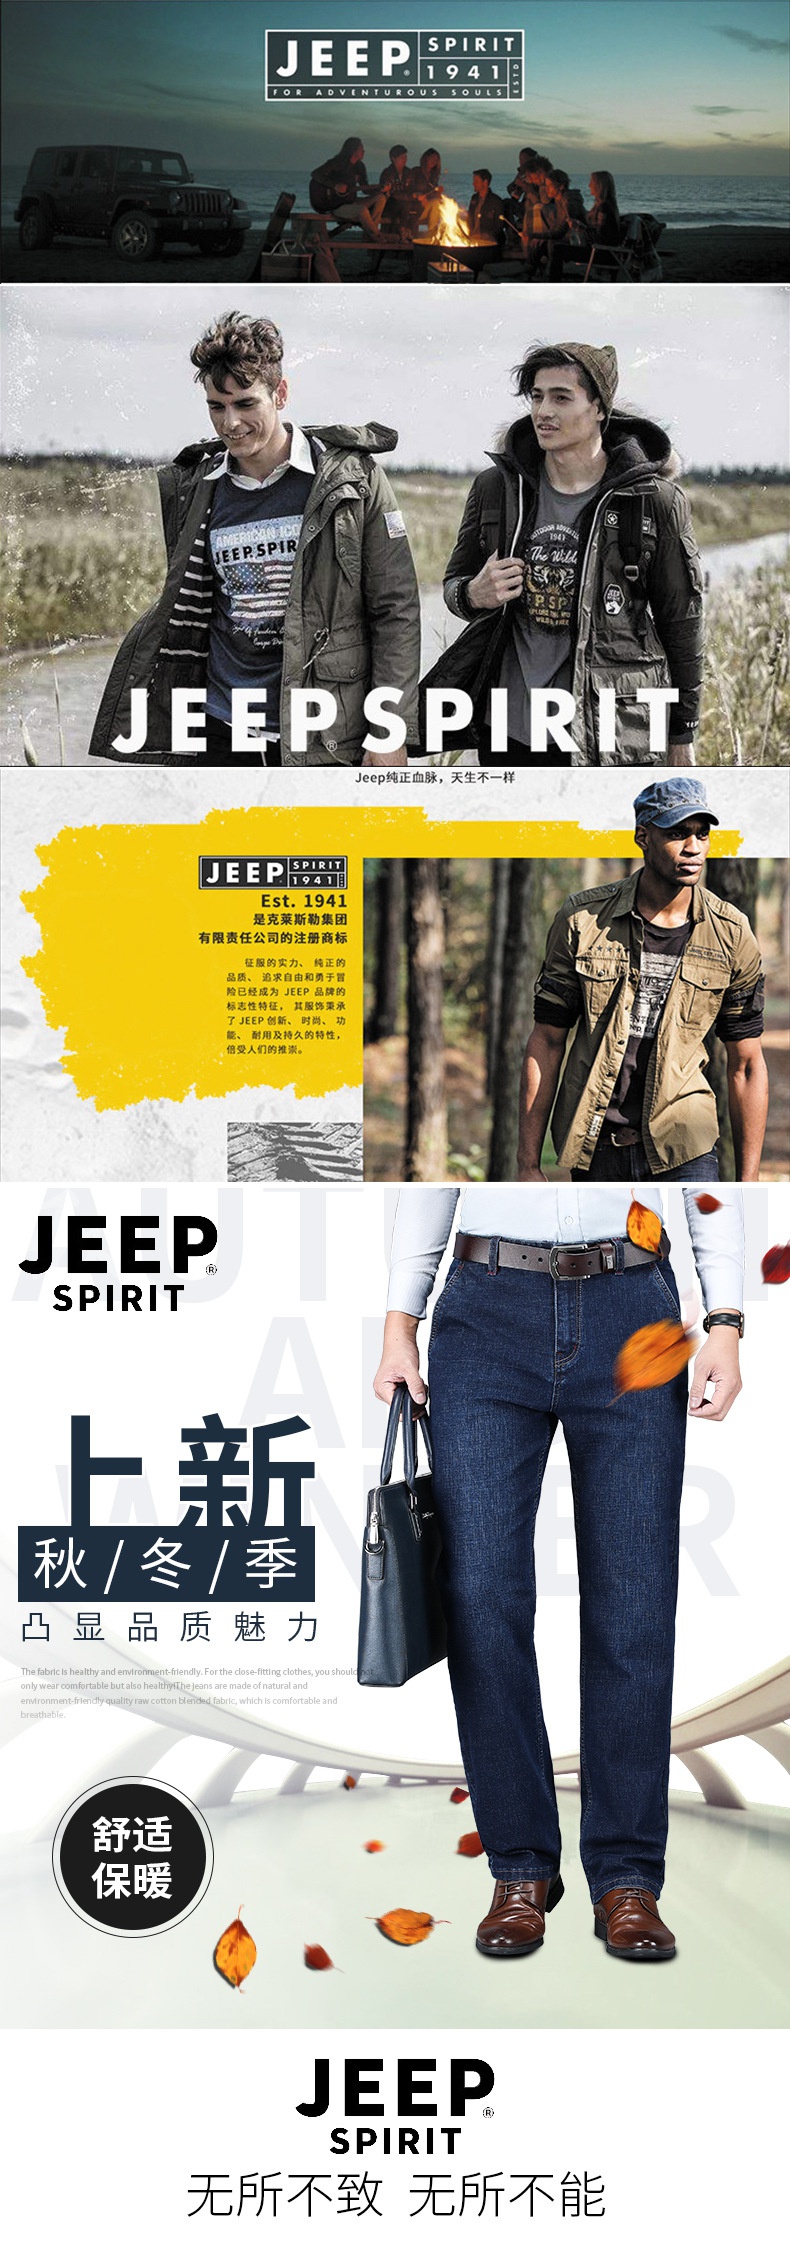 jeep spirit男士牛仔裤 吉普jeep官方旗舰正品美国牌.